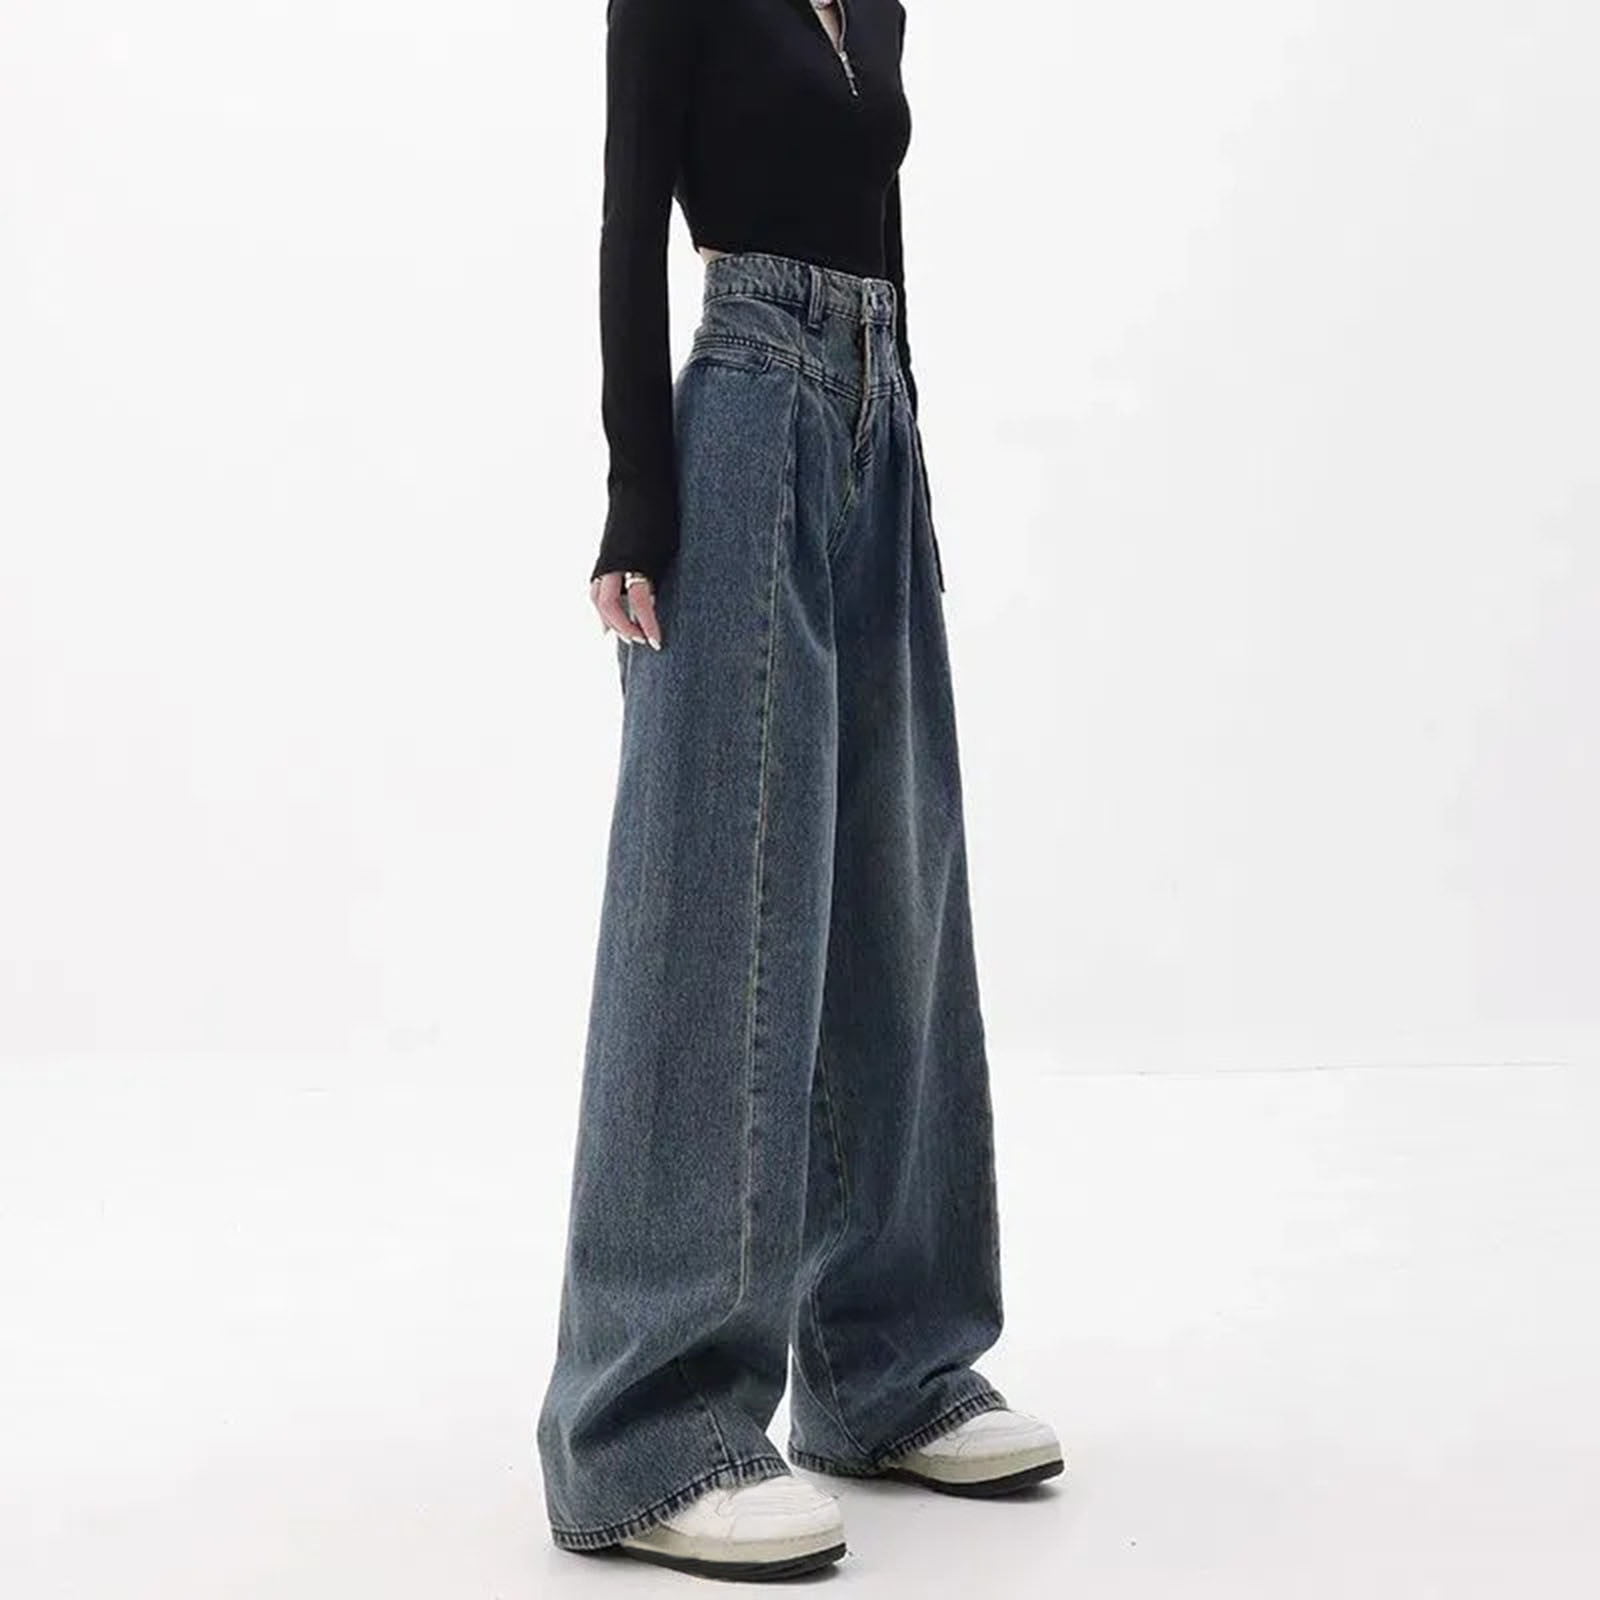 Buy Baggy Jeans Zara online | Lazada.com.ph